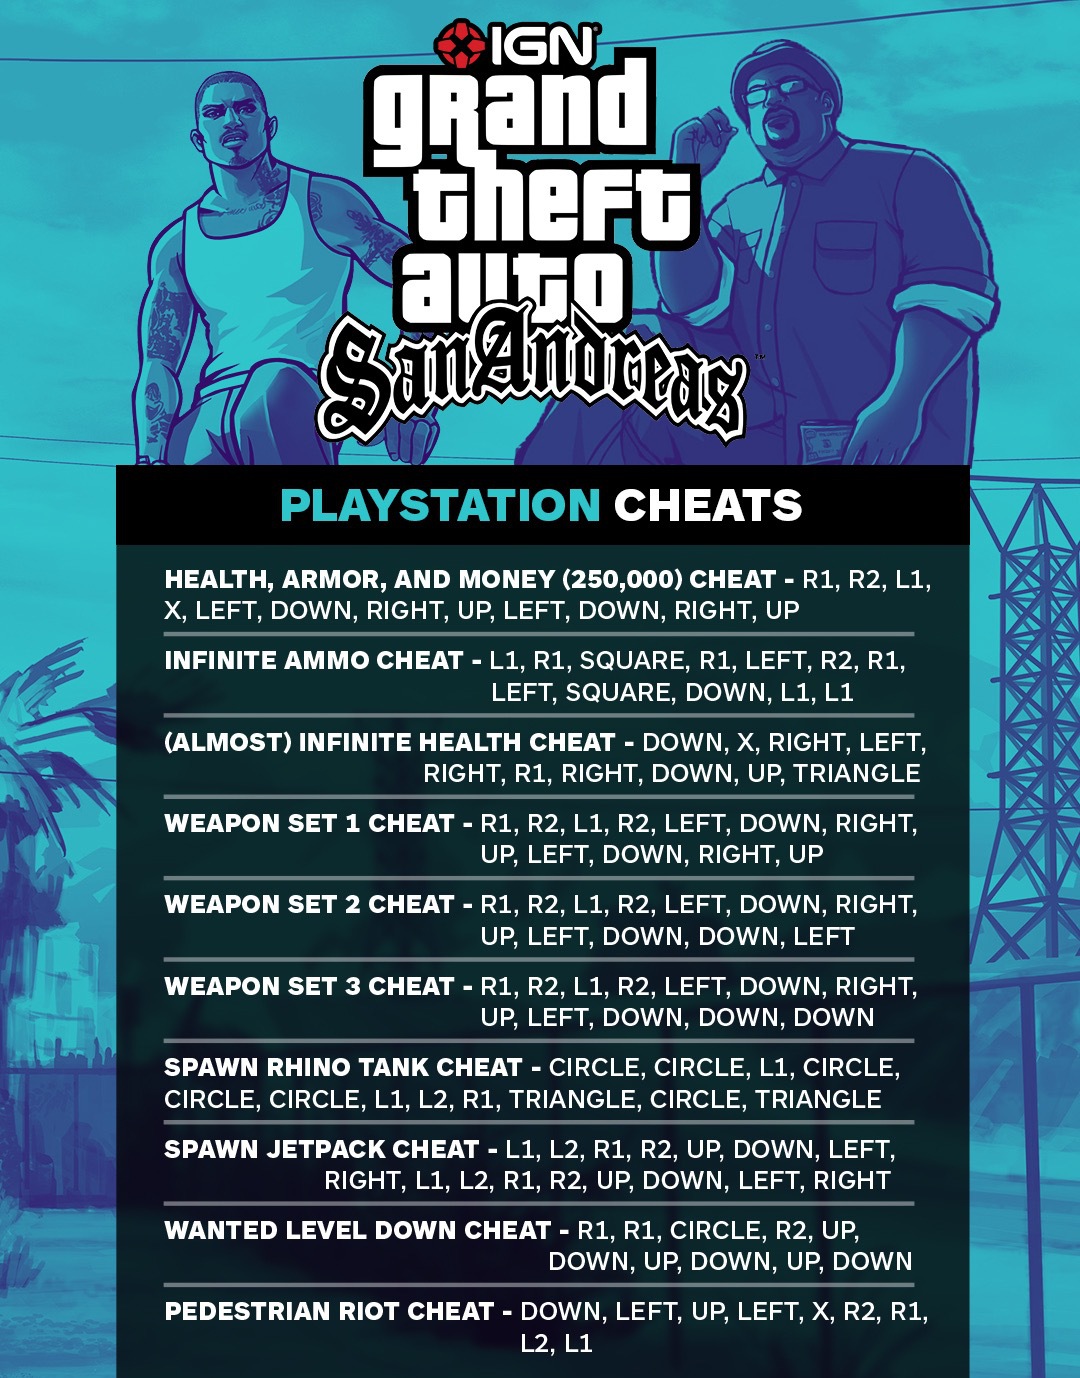 PlayStation Cheat Codes and Secrets - GTA: San Andreas Guide - IGN